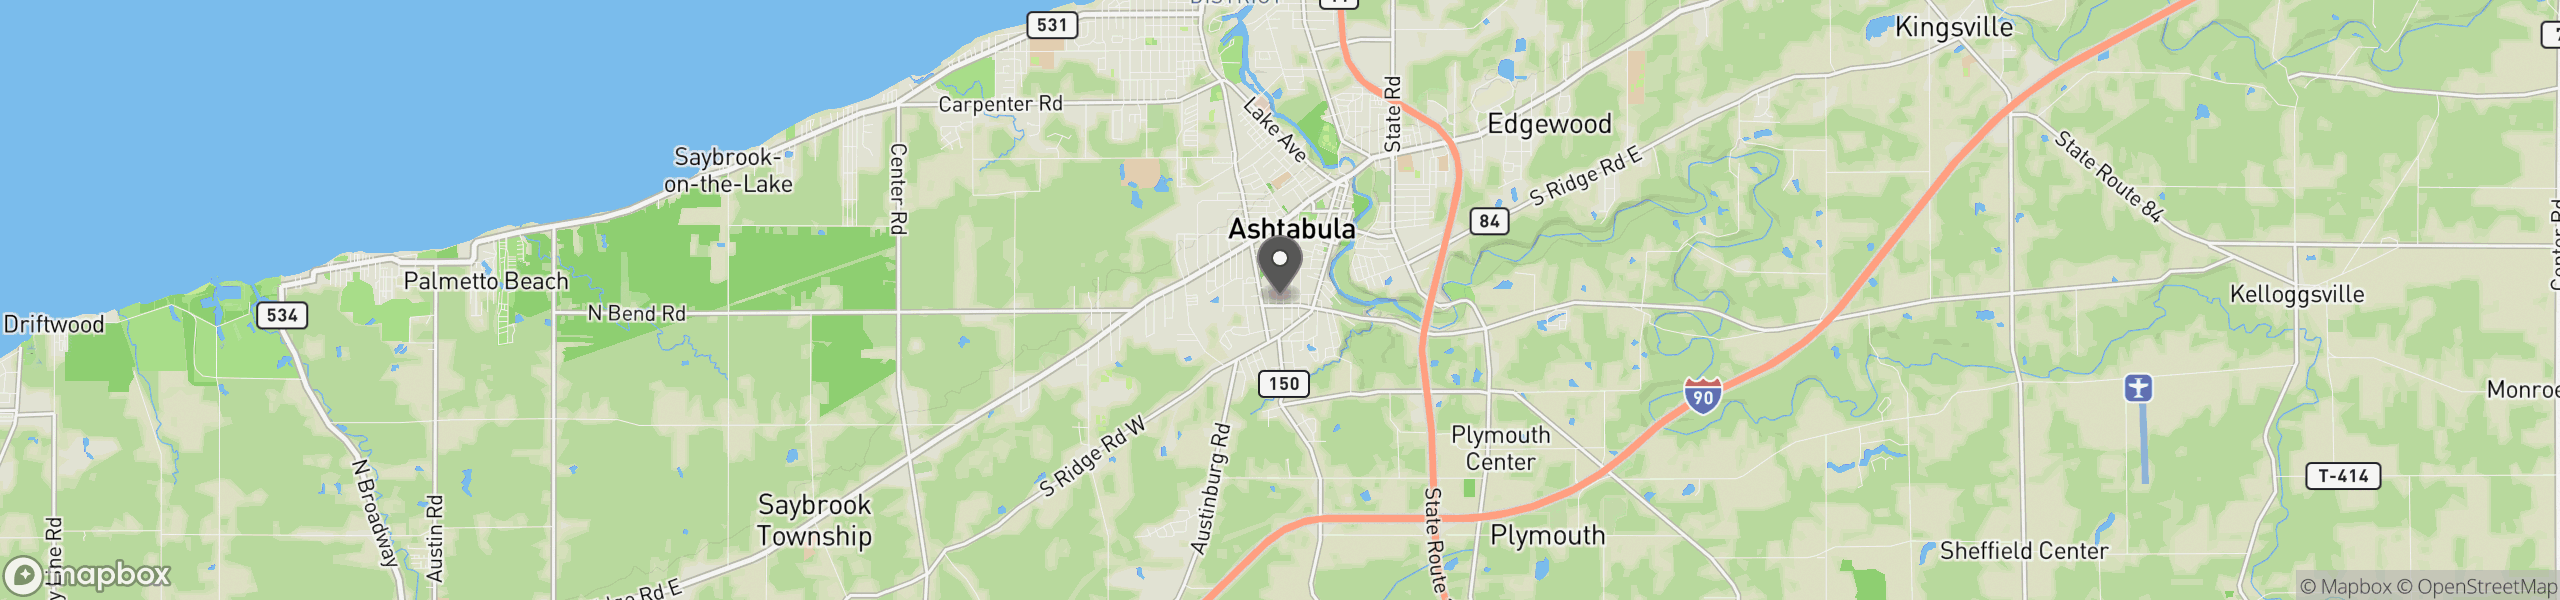 Ashtabula, OH 44004